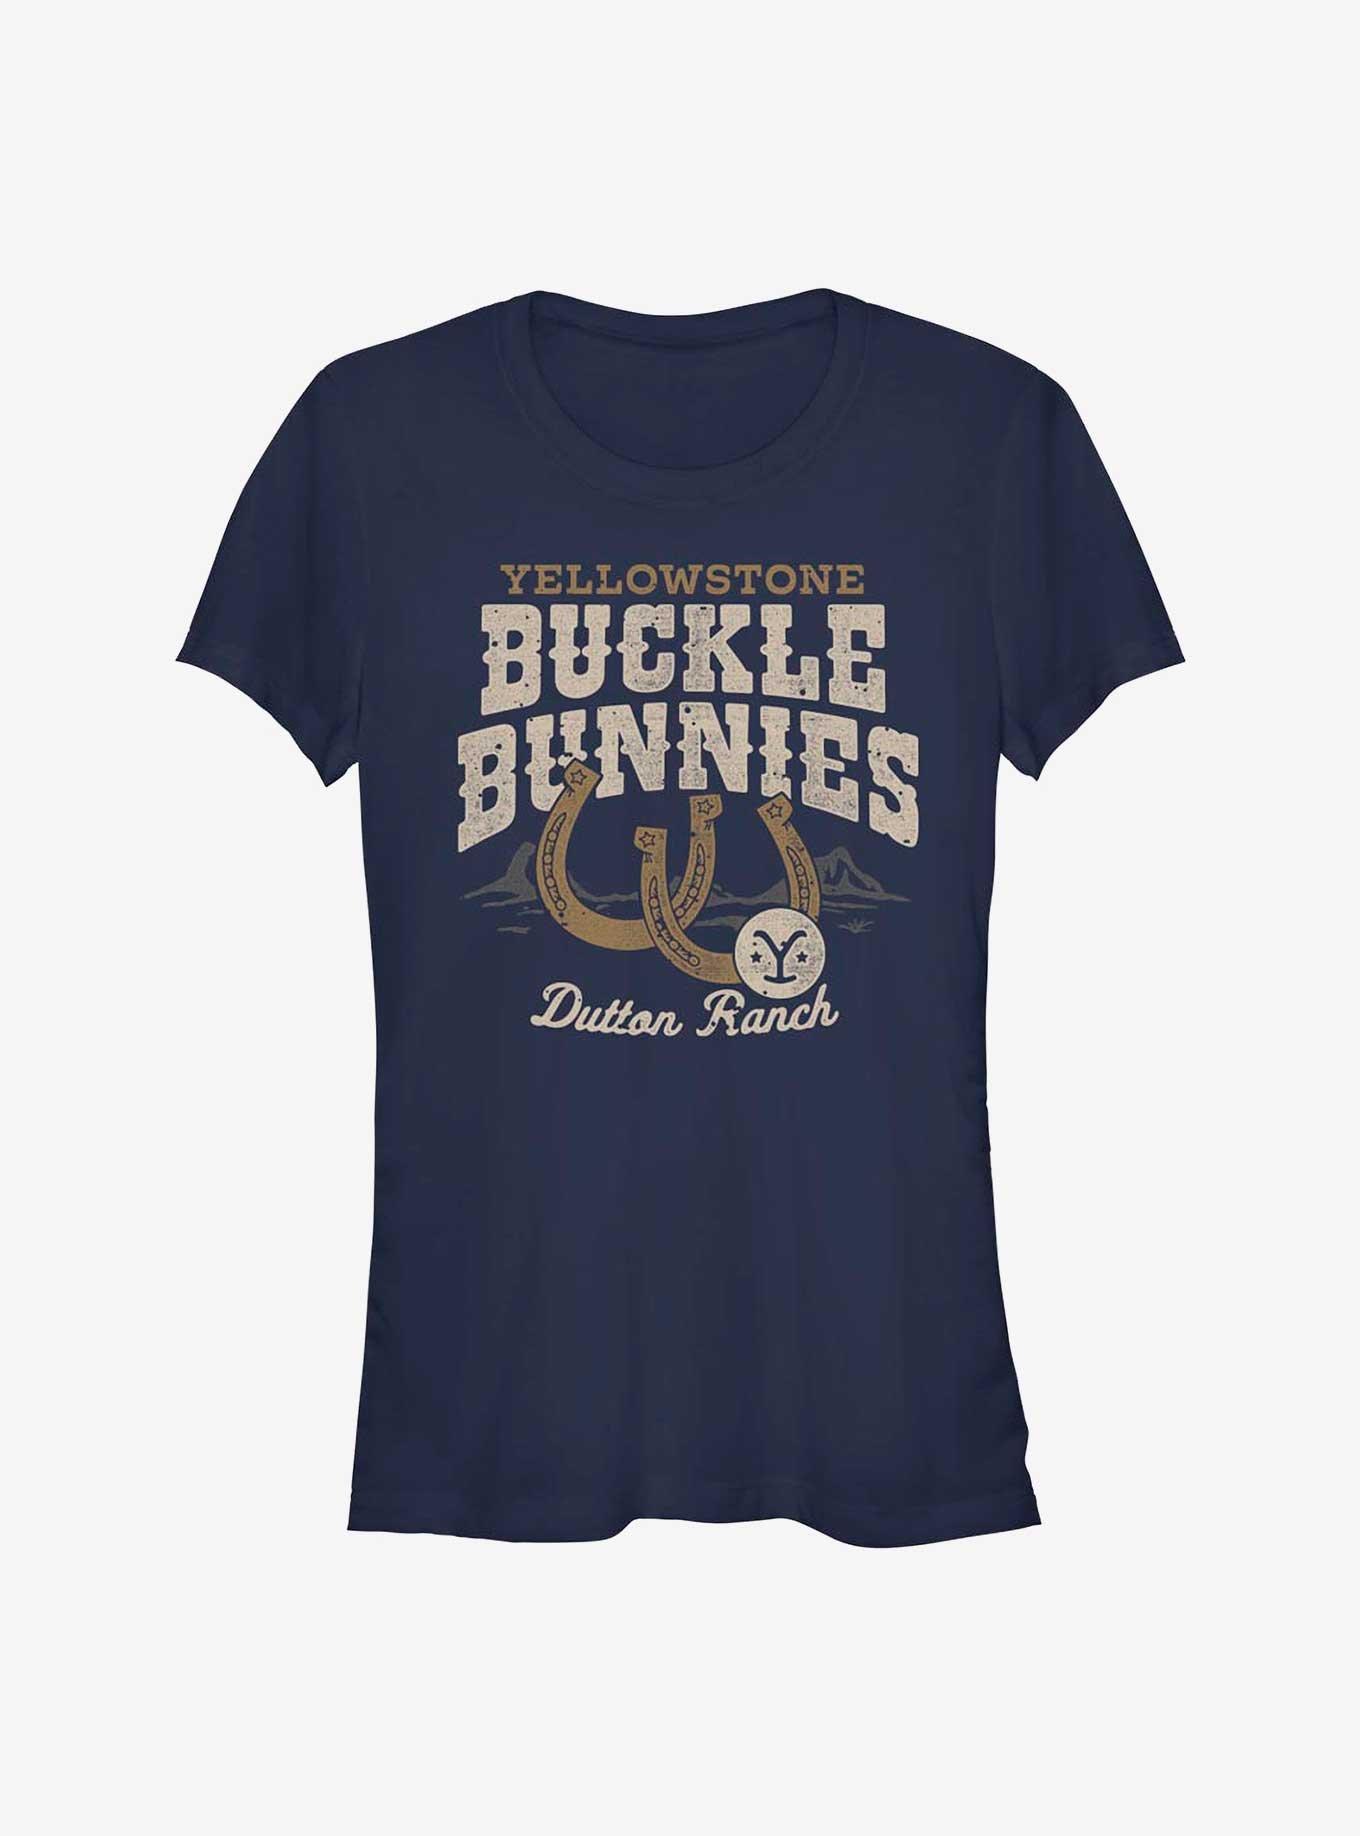 Yellowstone Buckle Bunnies Girls T-Shirt, NAVY, hi-res